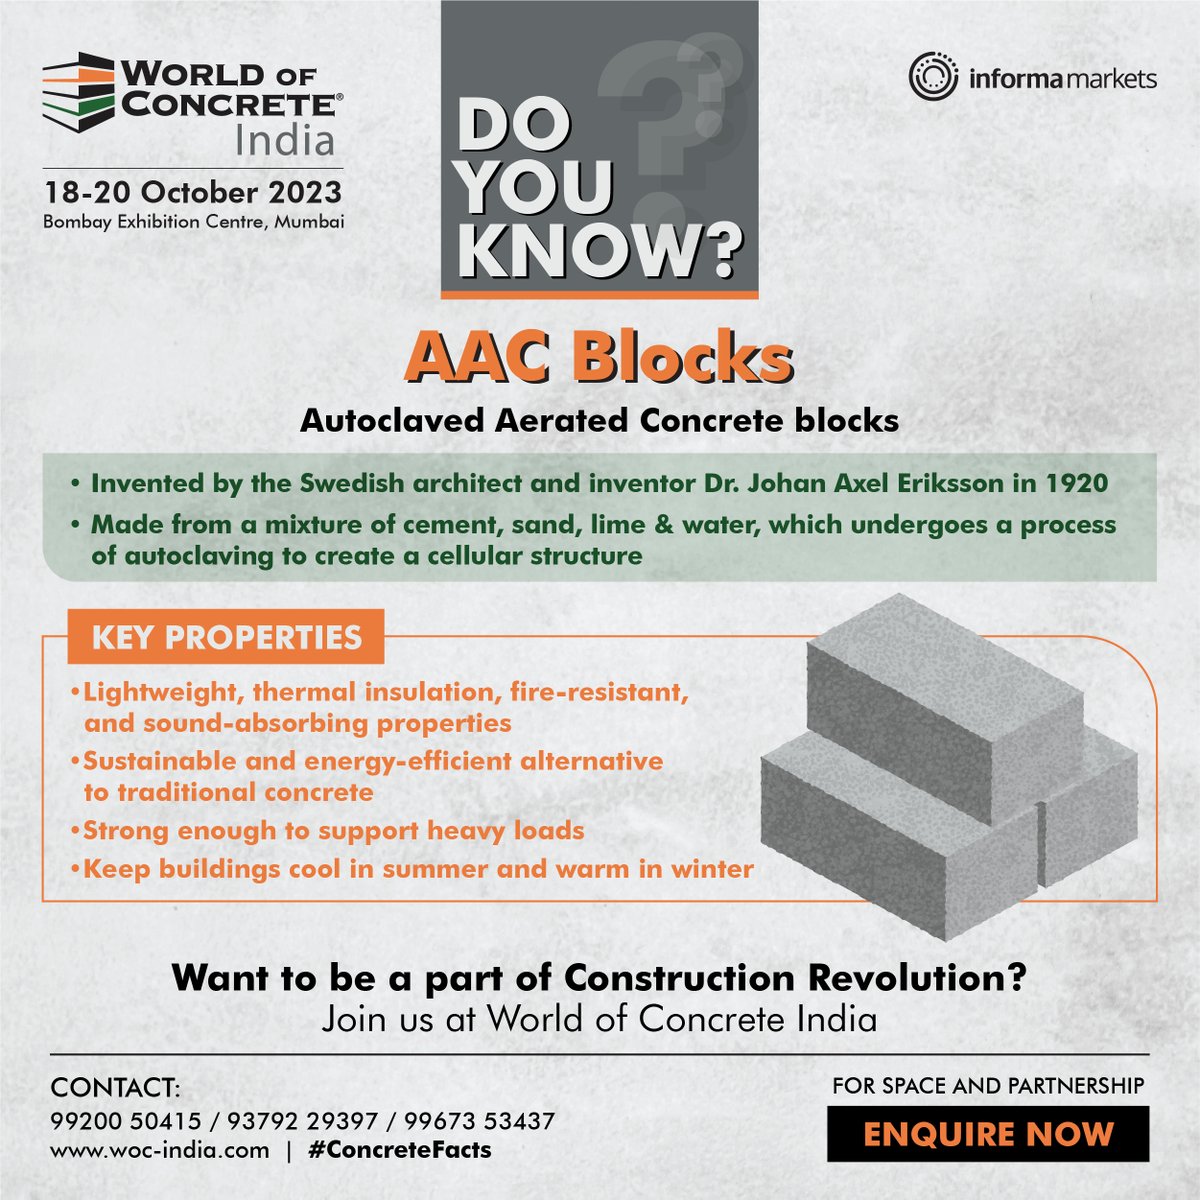 '𝗗𝗼 𝘆𝗼𝘂 𝗸𝗻𝗼𝘄?' series by 𝗪𝗼𝗿𝗹𝗱 𝗼𝗳 𝗖𝗼𝗻𝗰𝗿𝗲𝘁𝗲 𝗜𝗻𝗱𝗶𝗮!

𝗪𝗼𝗿𝗹𝗱 𝗼𝗳 𝗖𝗼𝗻𝗰𝗿𝗲𝘁𝗲 𝗜𝗻𝗱𝗶𝗮
📅 18-20 Oct
📍 Bombay Exhibition Centre, Mumbai
🎫 bit.ly/43emIc6

#WorldOfConcreteIndia #DYK #AACBlocks #ConstructionIndustry #BuildingMaterials